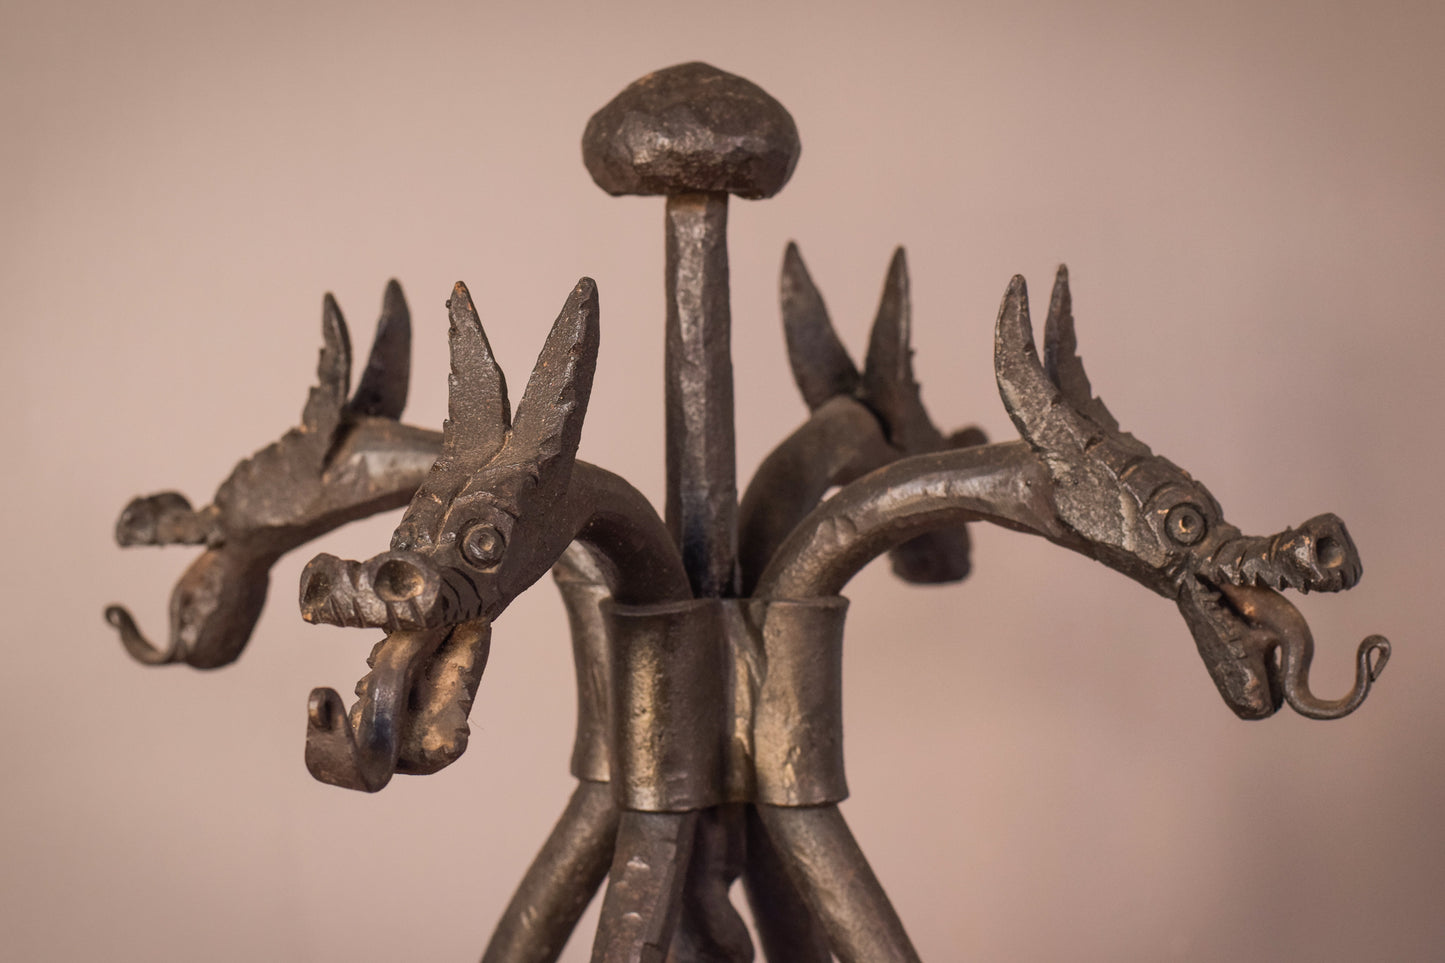 Art Nouveau Wrought Iron Dragon Stand